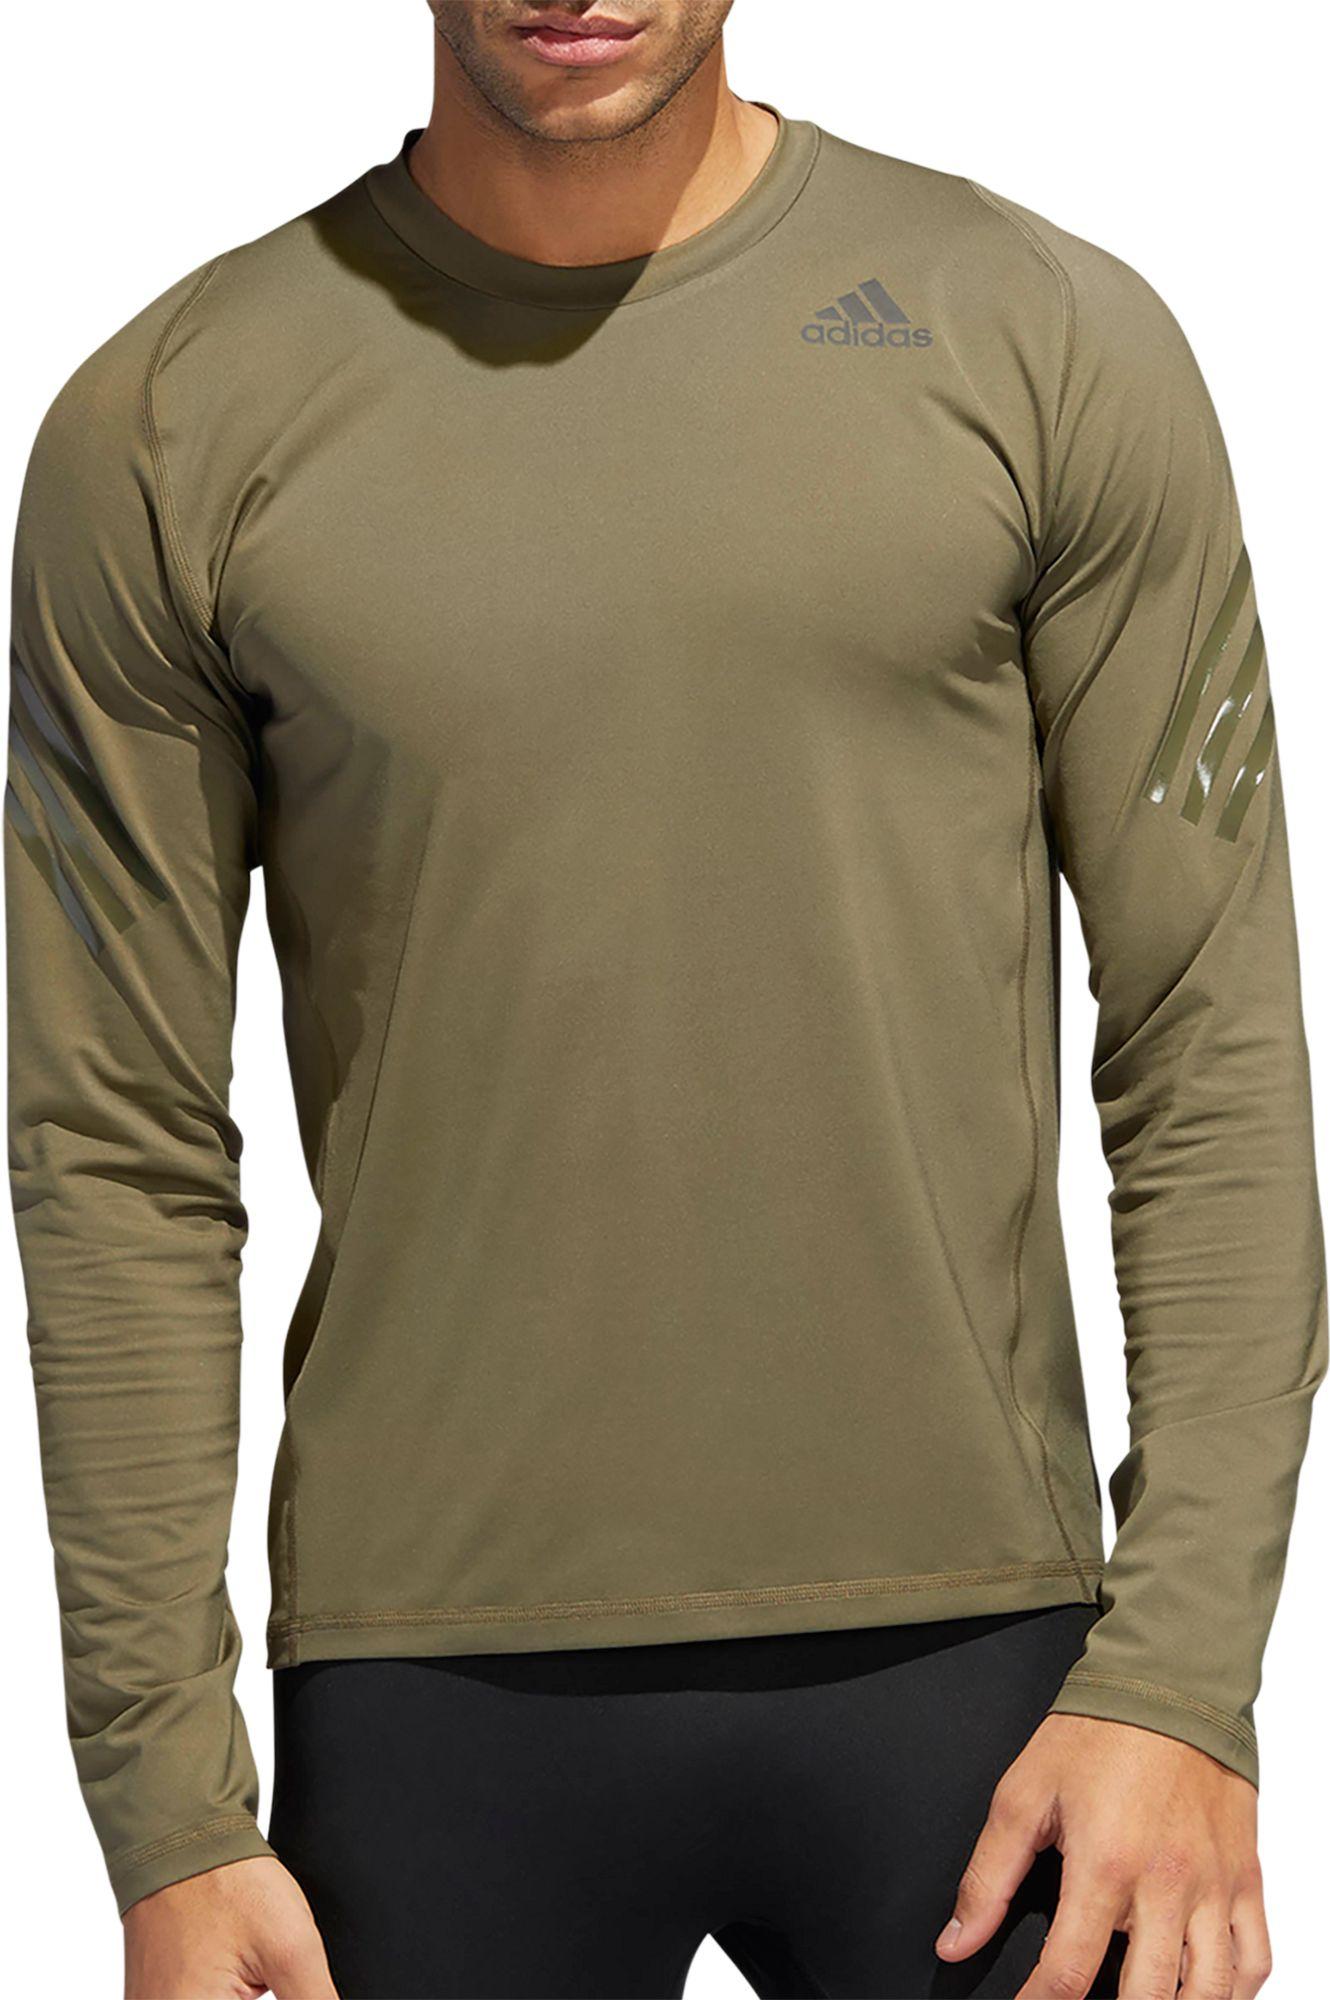 adidas Alphaskin 3-stripes Long Sleeve Shirt in Green for Men - Lyst